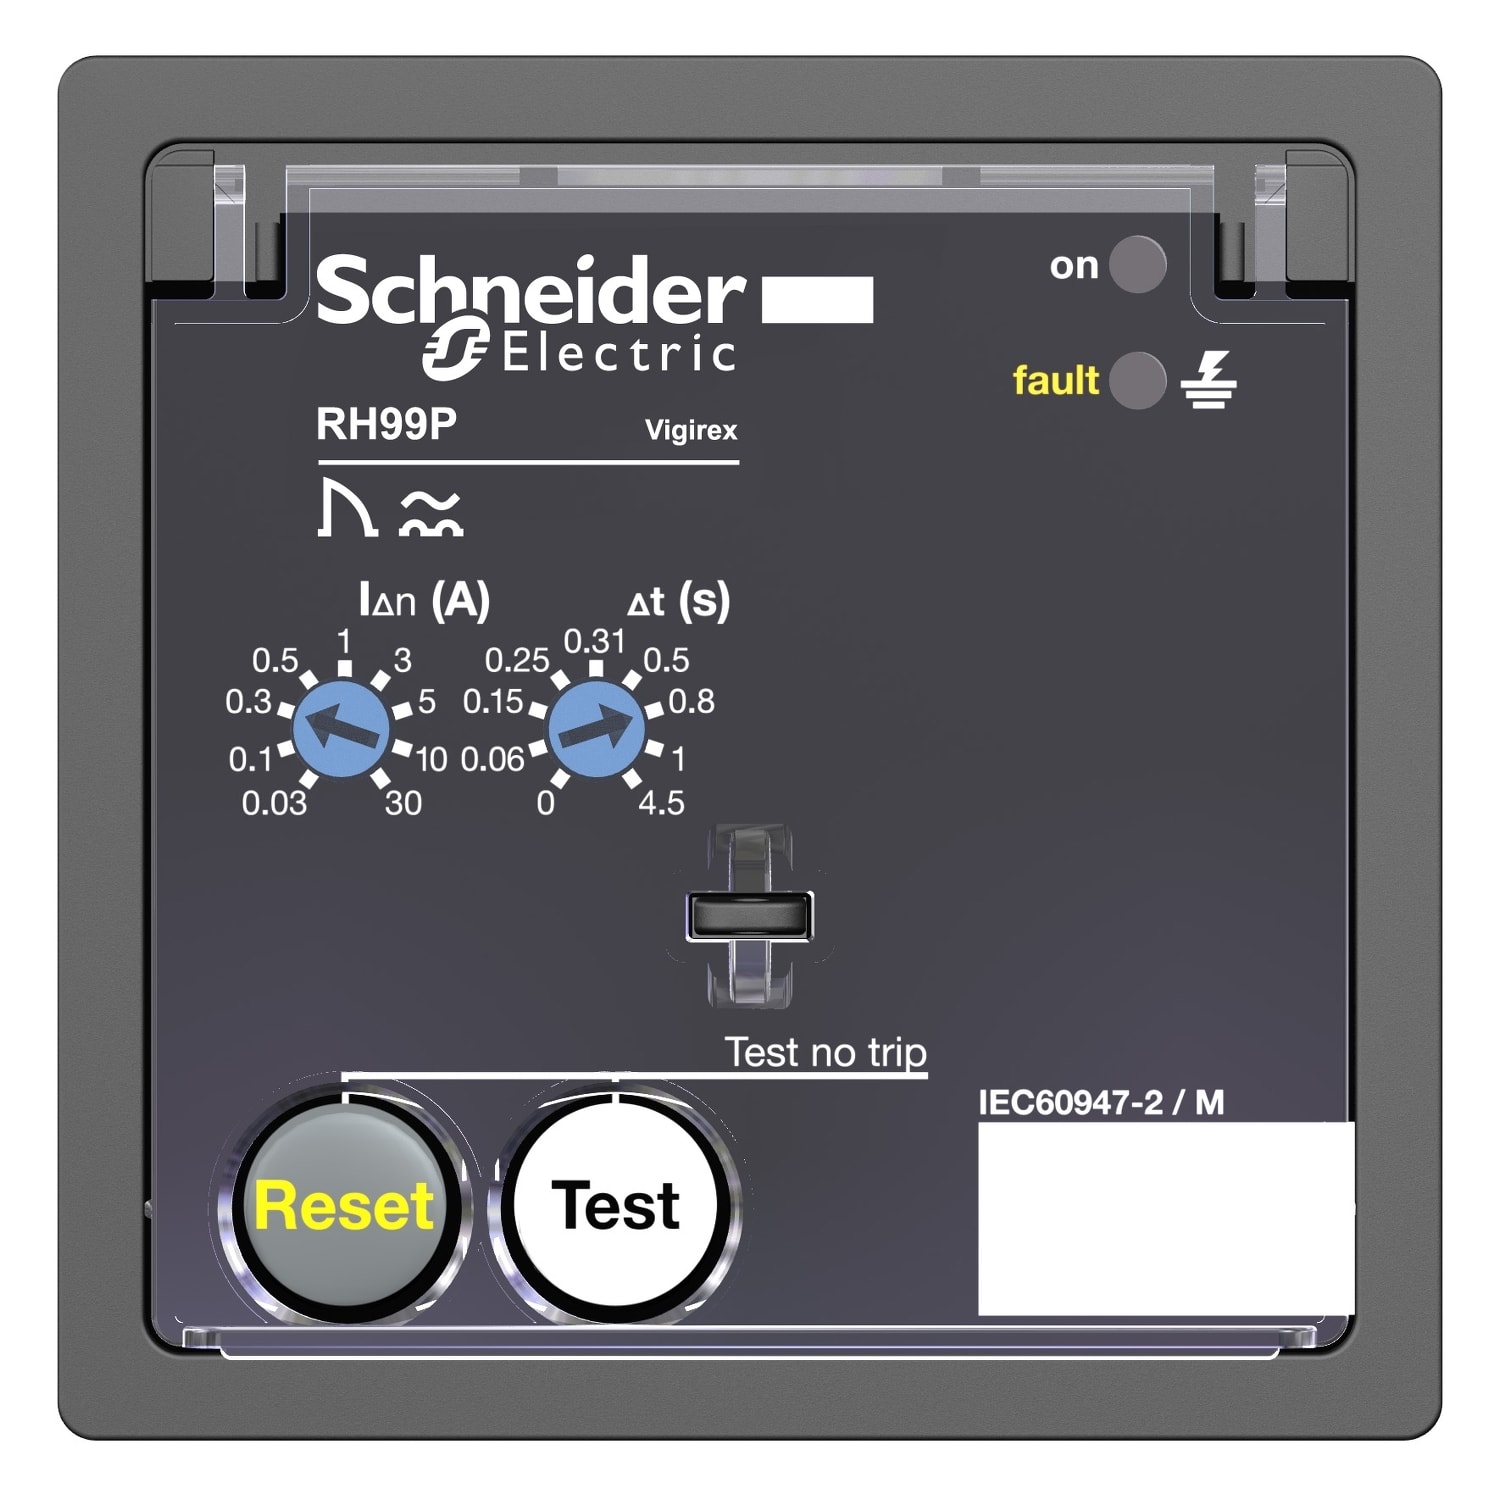 Schneider Electric - Vigirex RH99P 220-240VCA sensibilite 0,03-30A rearmement automatique